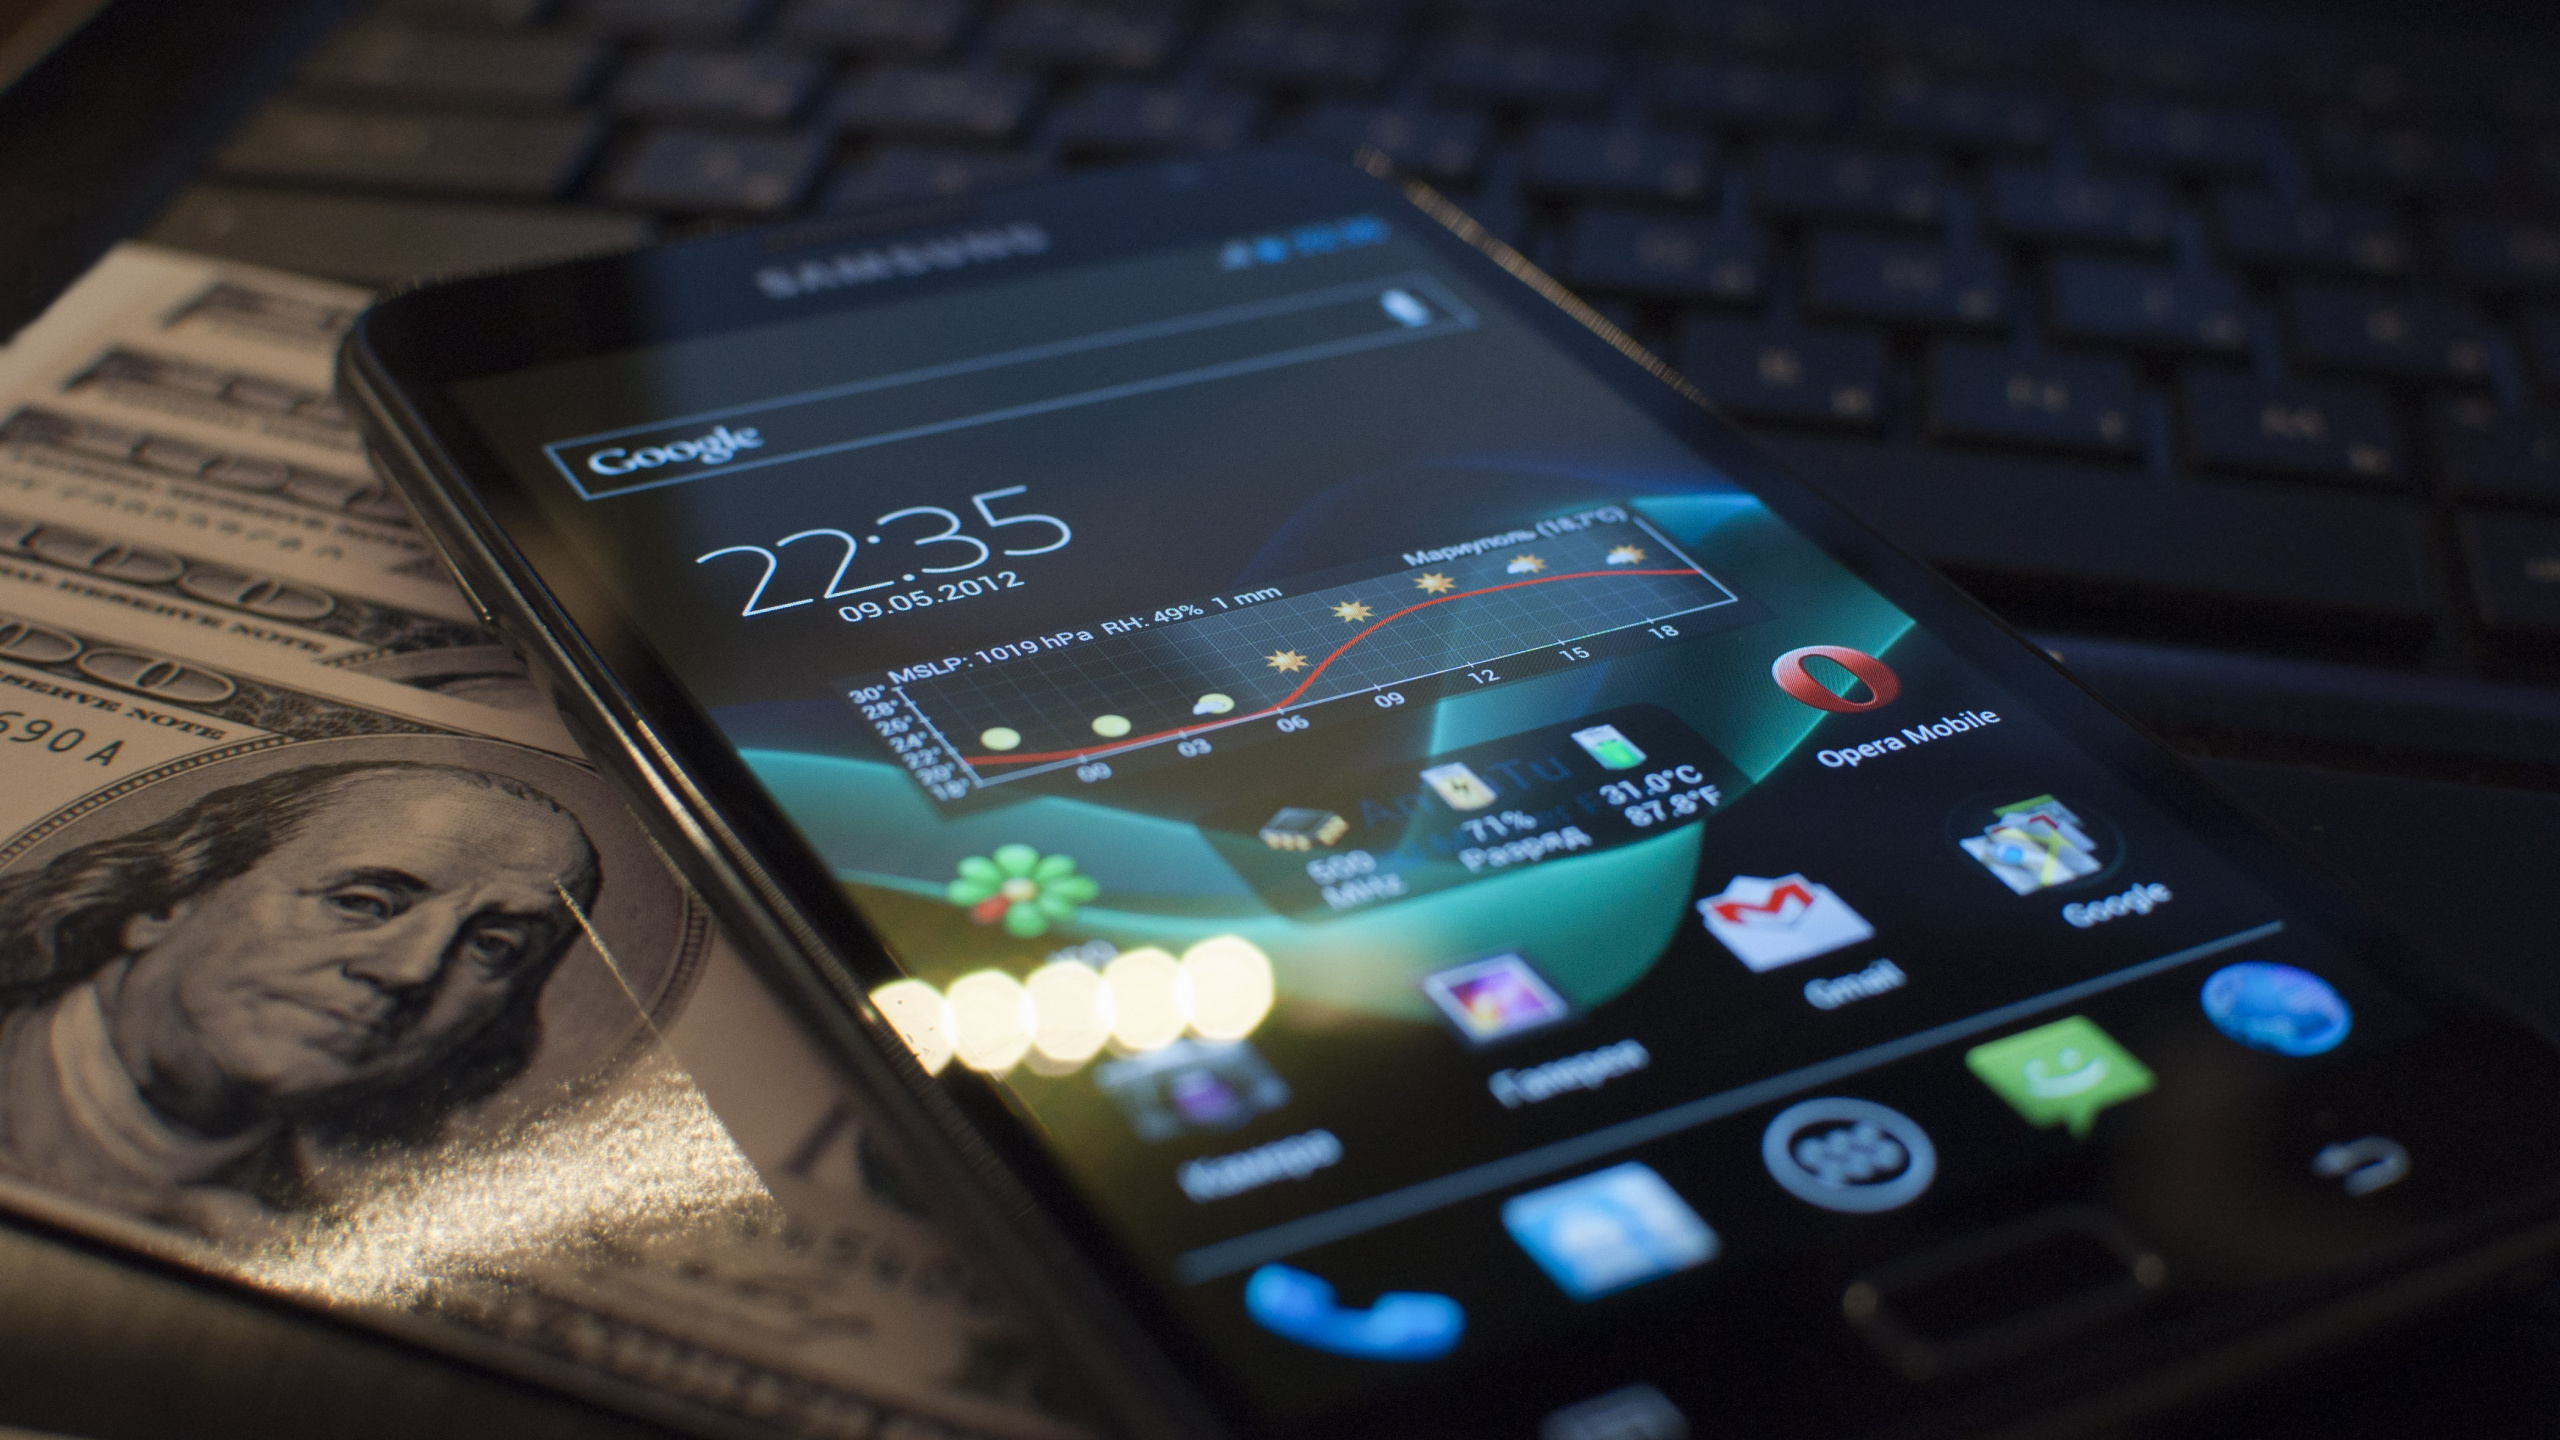 Smartphone Android Samsung Noir Sur Ordinateur Portable Noir. Wallpaper in 2560x1440 Resolution